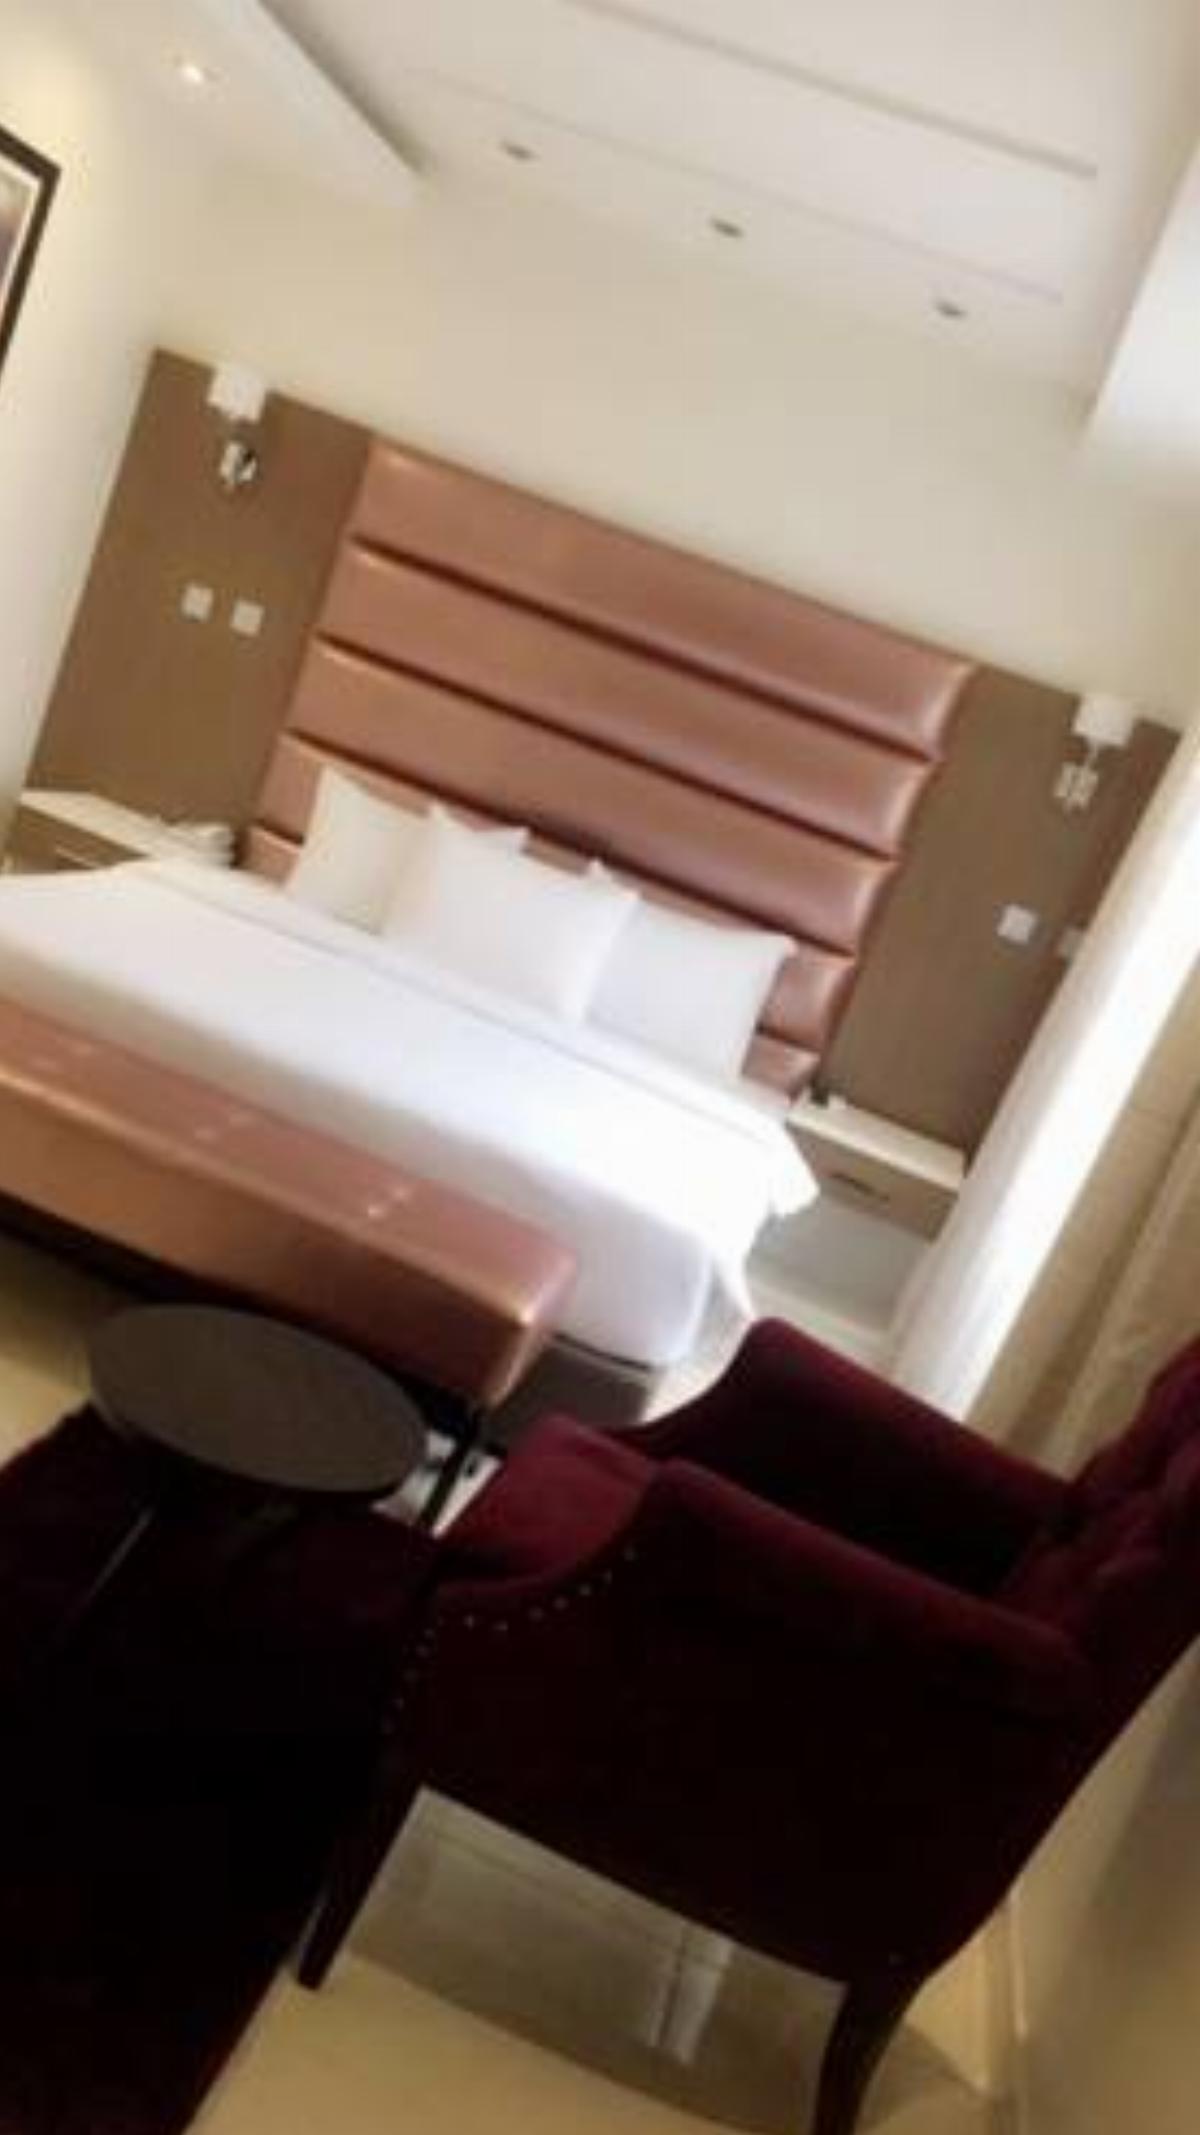 Box Residence Hotel Hotel Lagos Nigeria